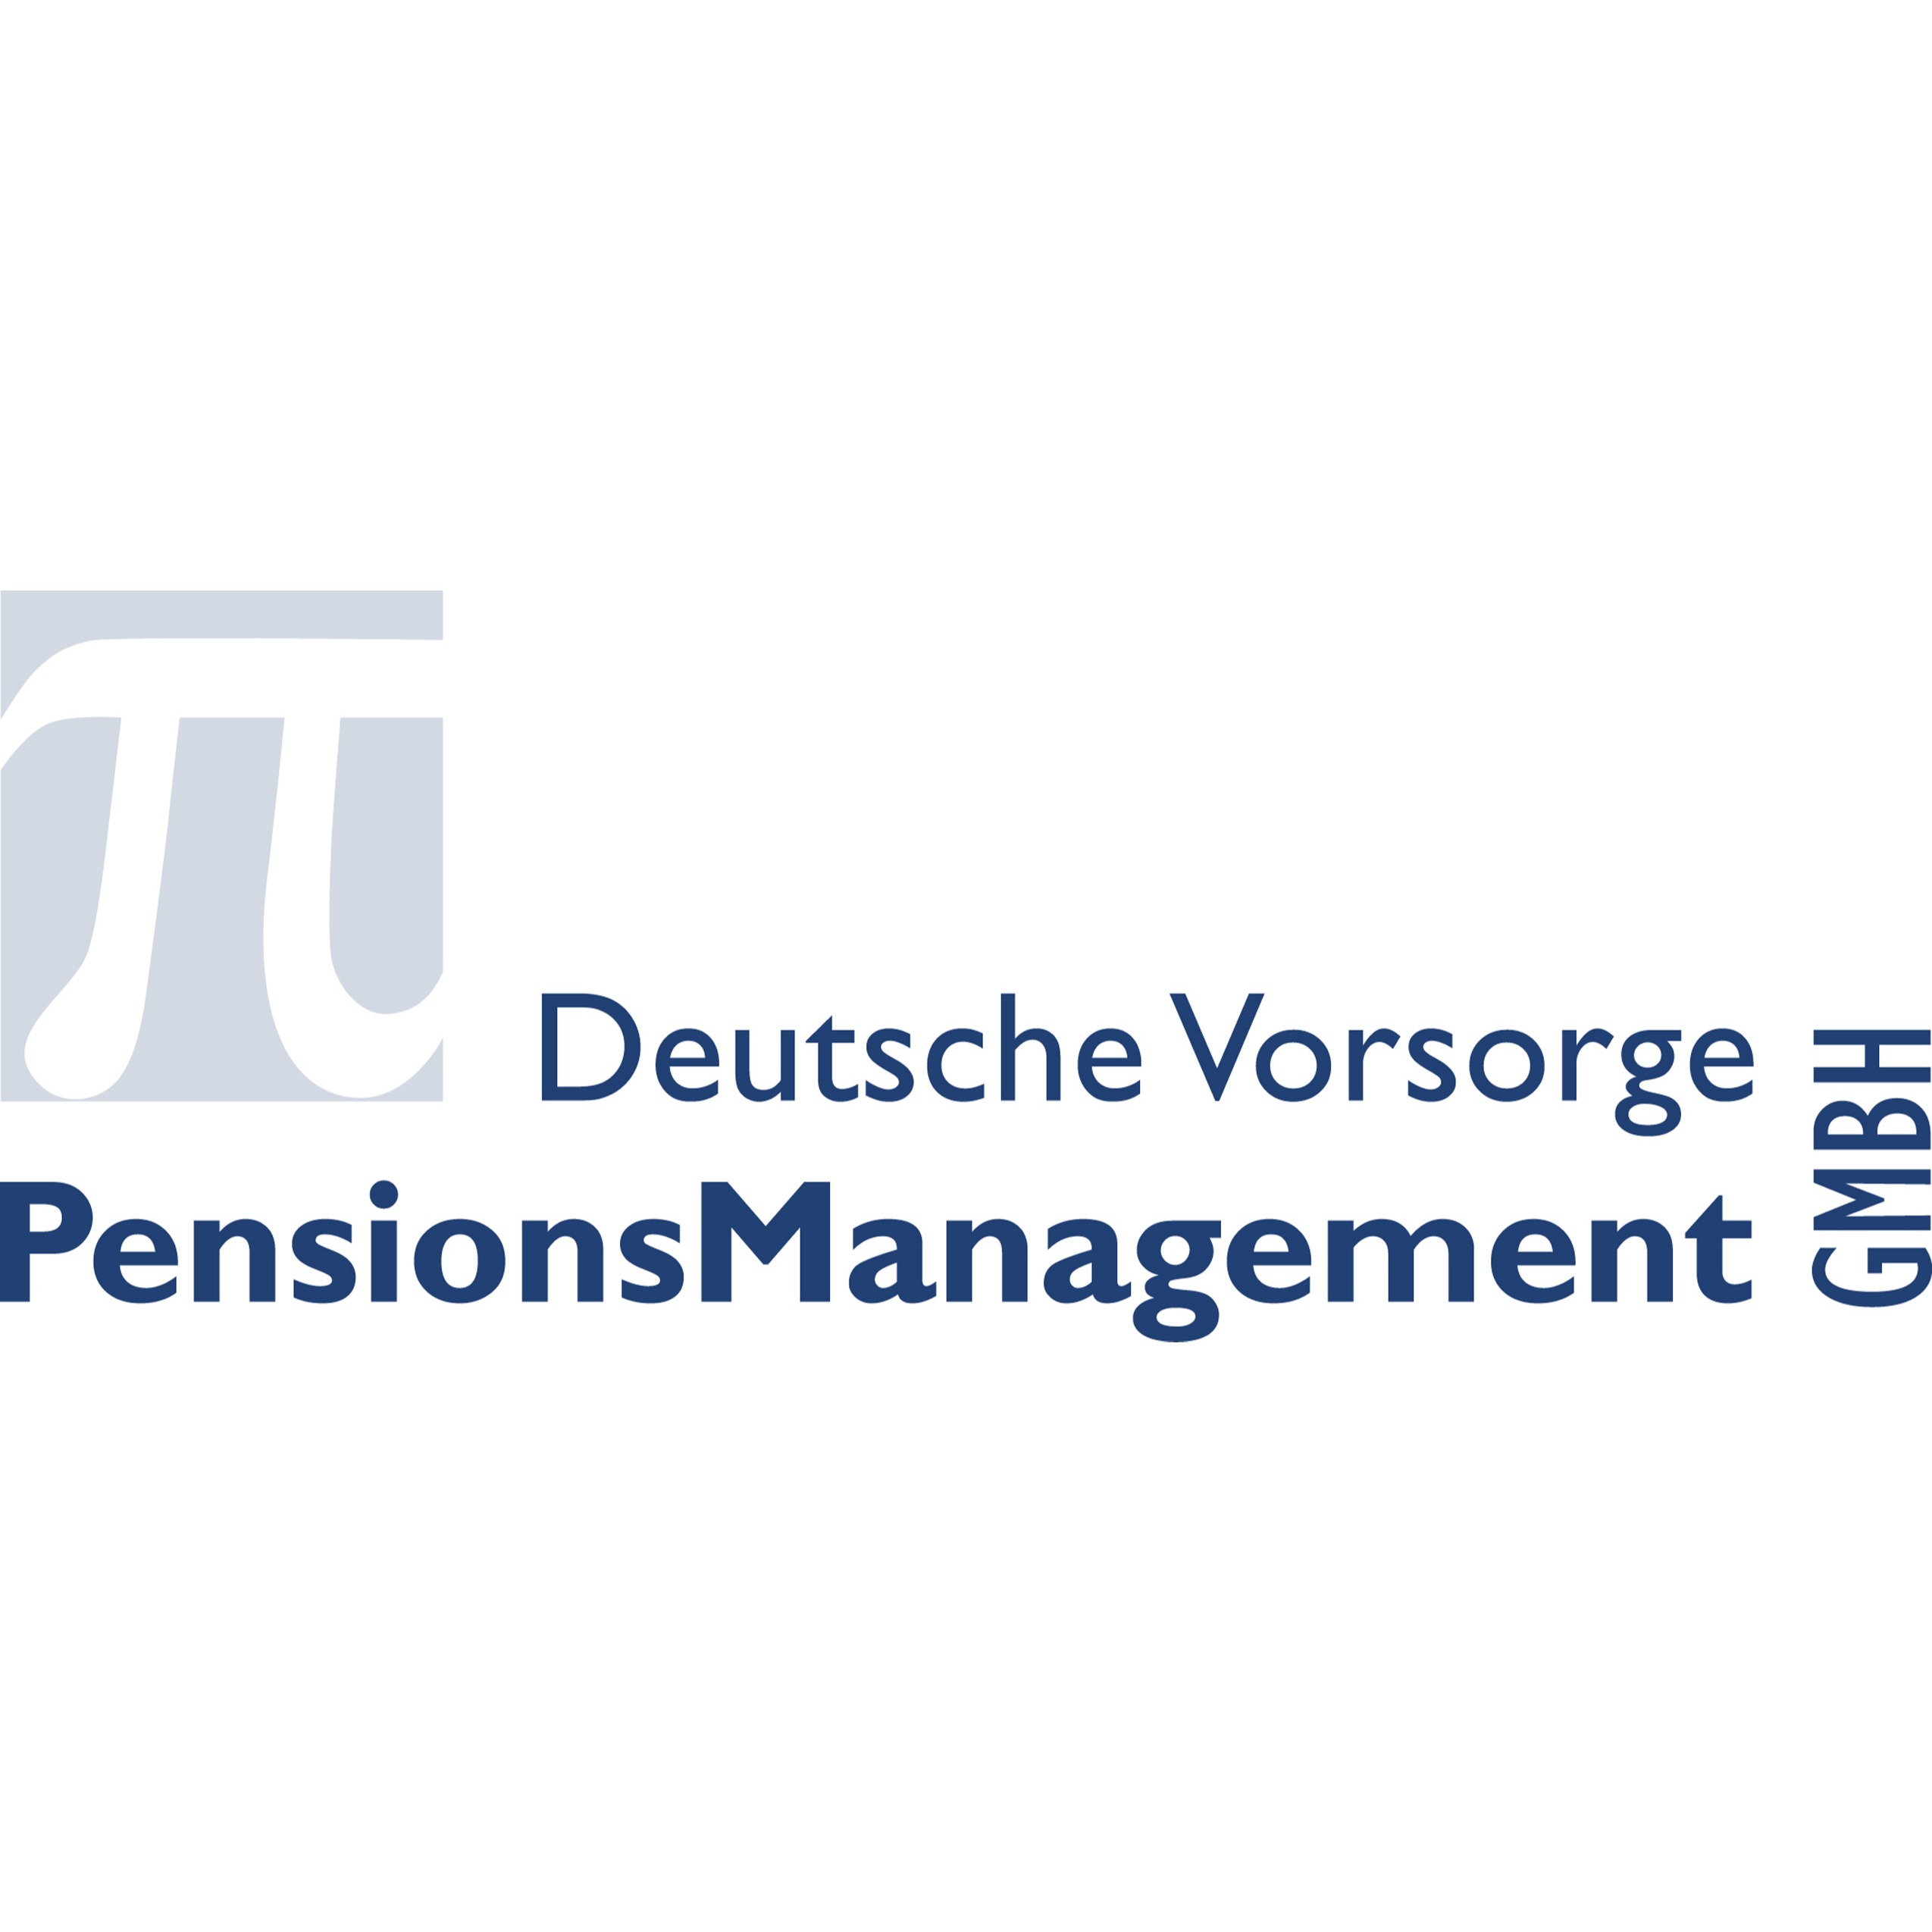 Deutsche Vorsorge Pensionsmanagement GmbH Logo